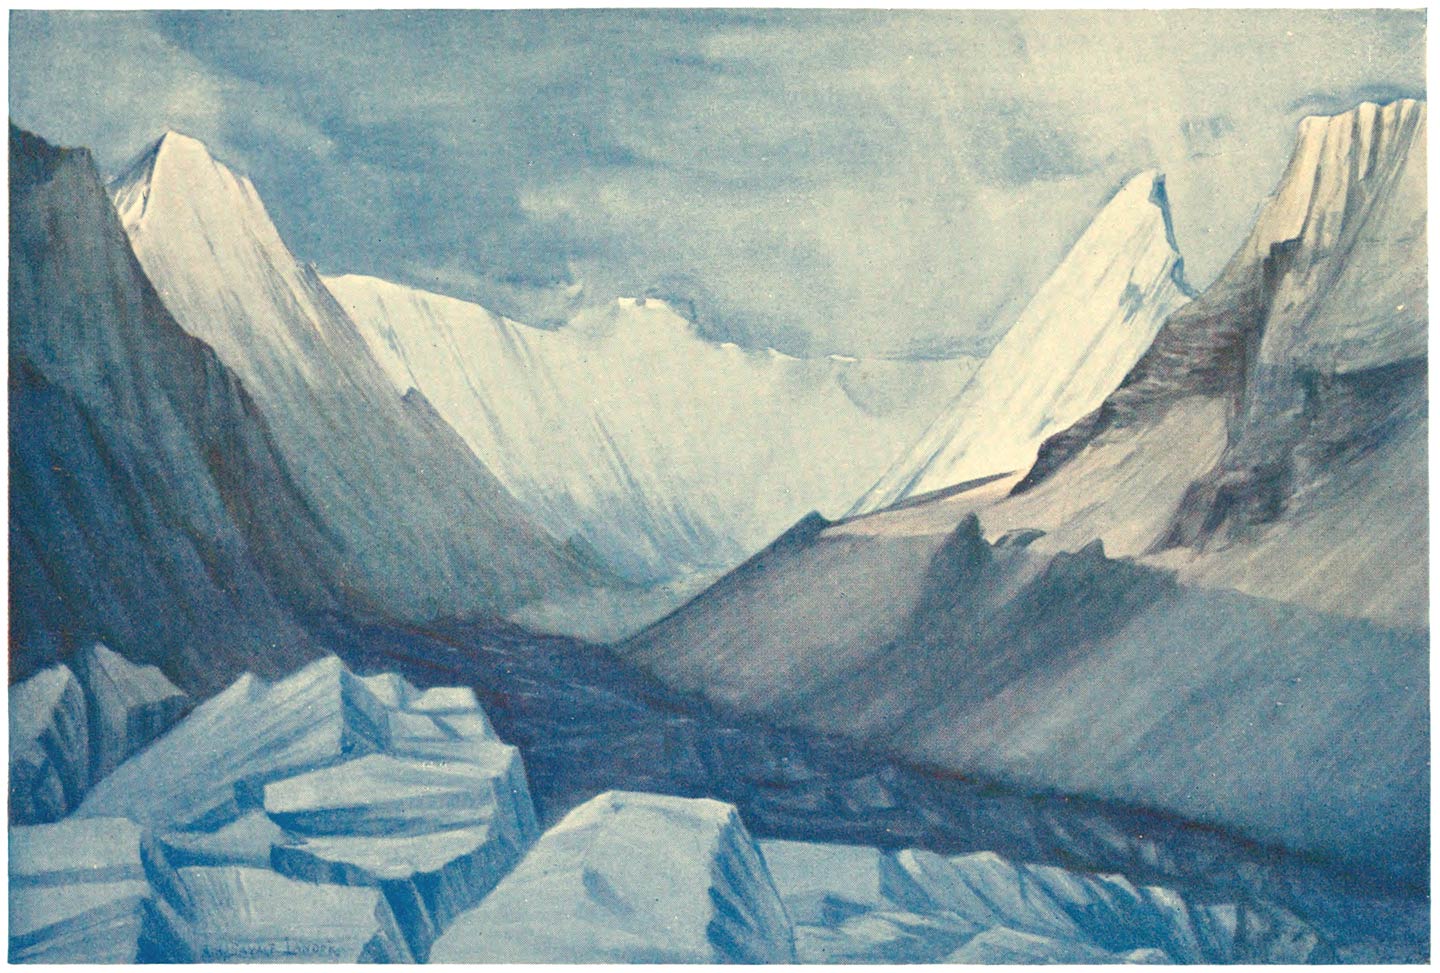 The Lumpa Basin and Charles Landor Glacier